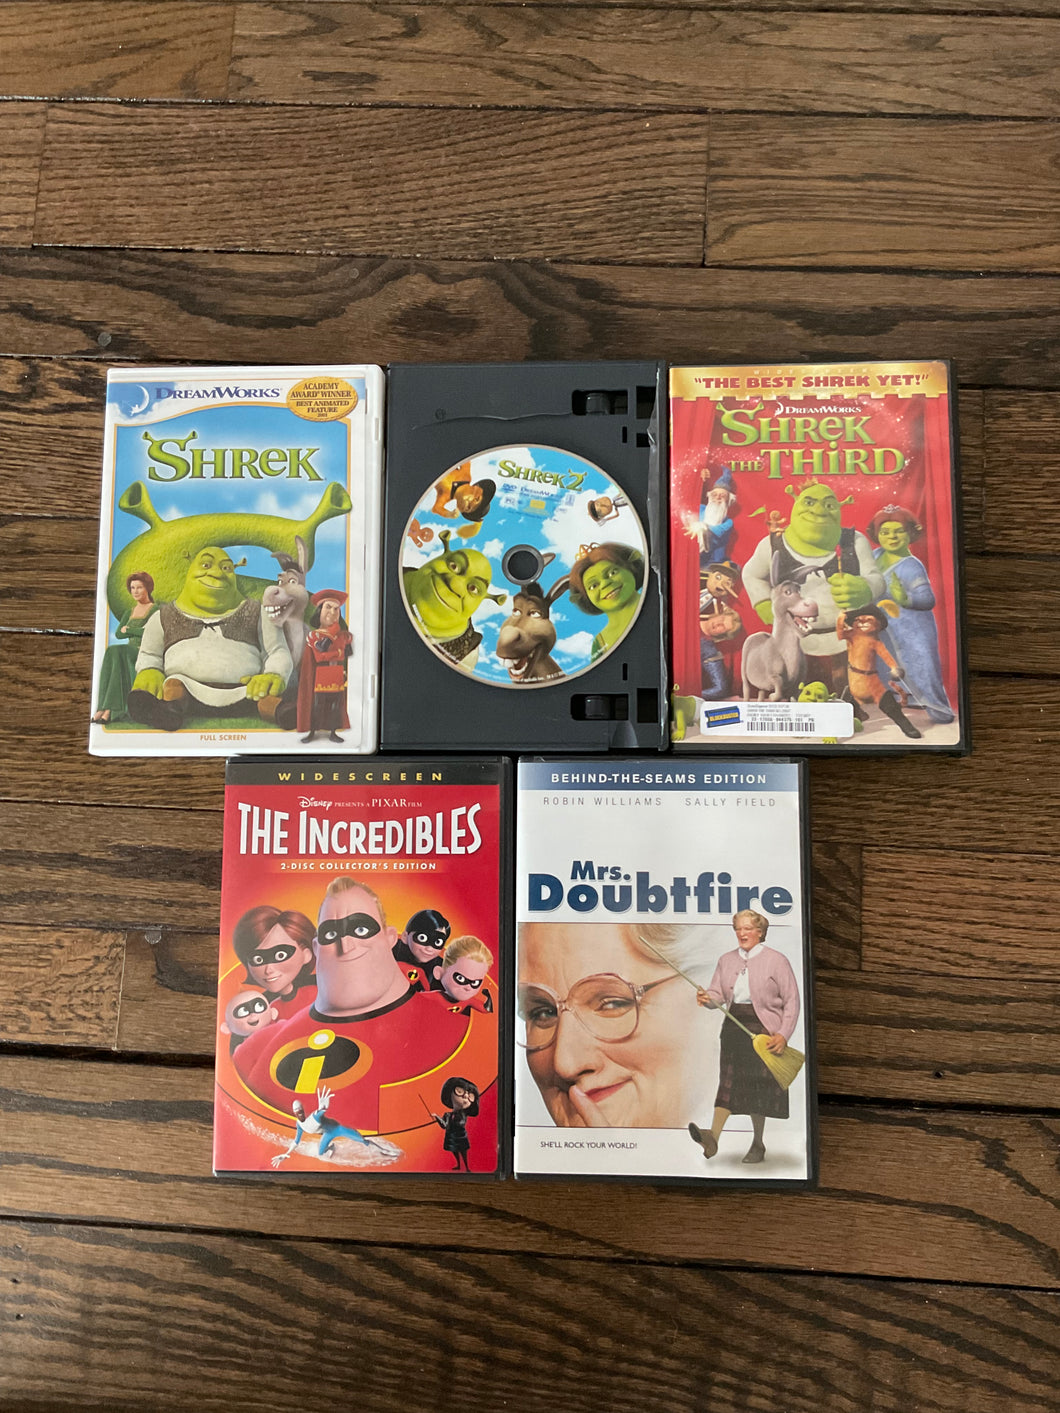 5 DVDs Shrek I, II, and III, The Invincibles, Mrs. Doubtfire